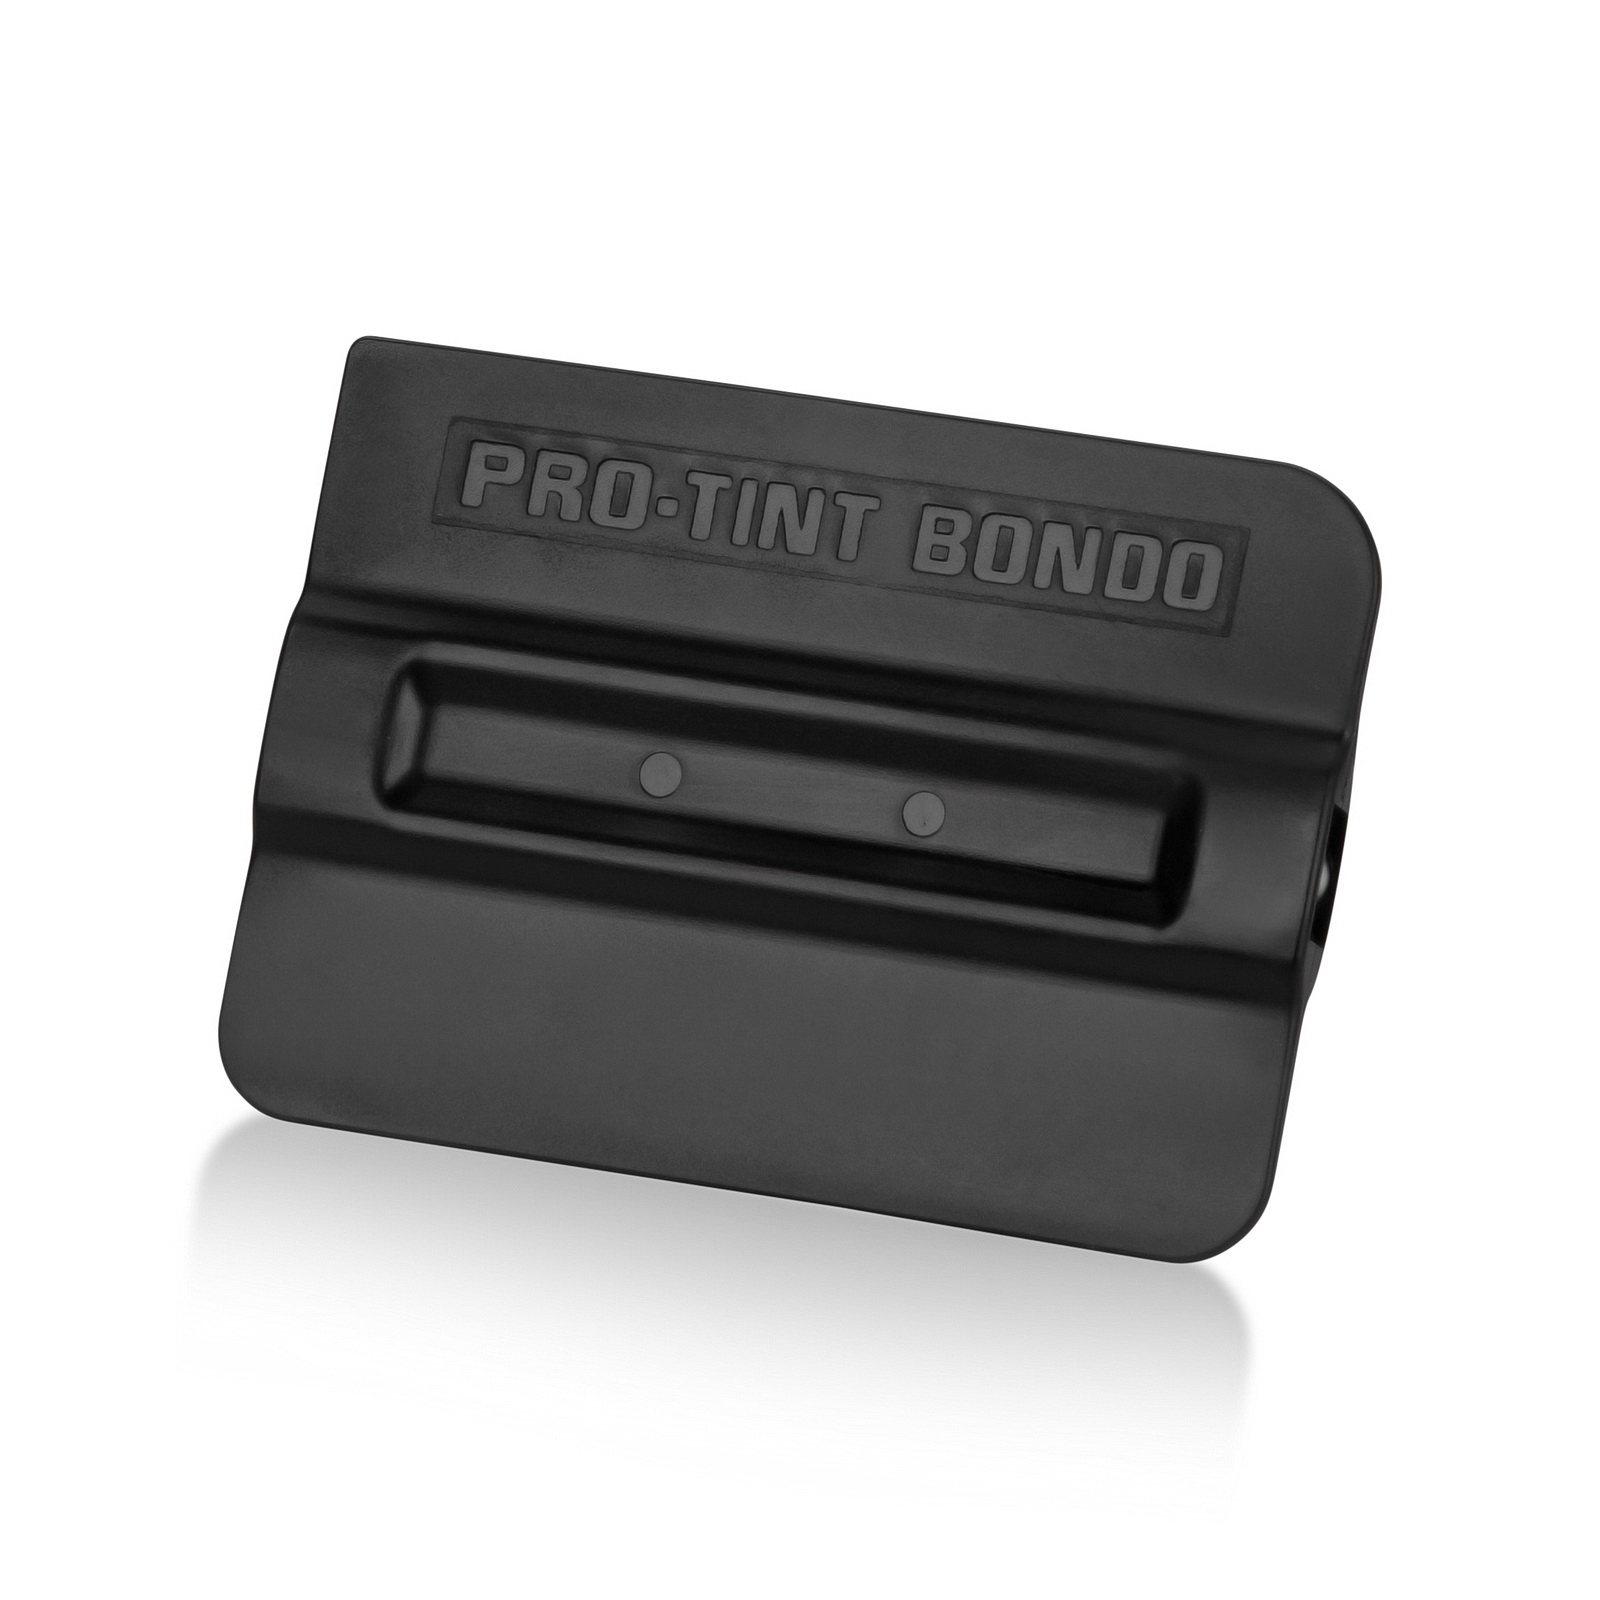 PRO-TINT BONDO 4'' x 3'' Black Magnet Squeegee, Hard Hardness for Vinyl Application